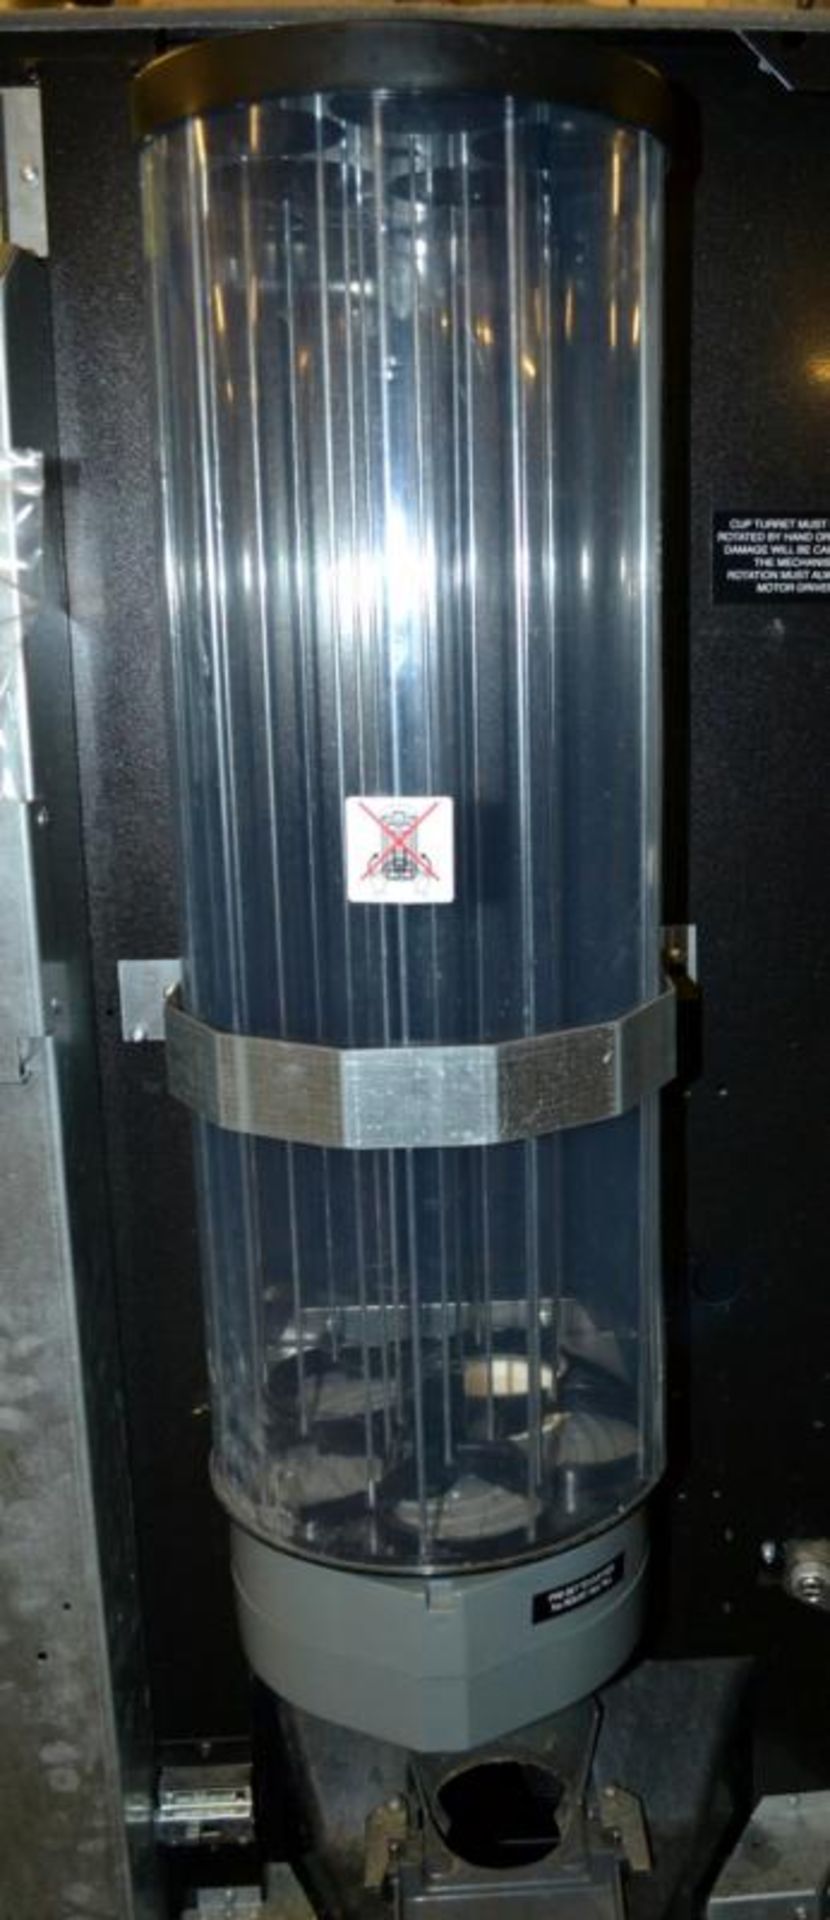 1 x Crane ""Evolution"" Hot Beverage Drinks Vending Machine With Keys - Year: 2011 - Recently Taken - Image 2 of 19